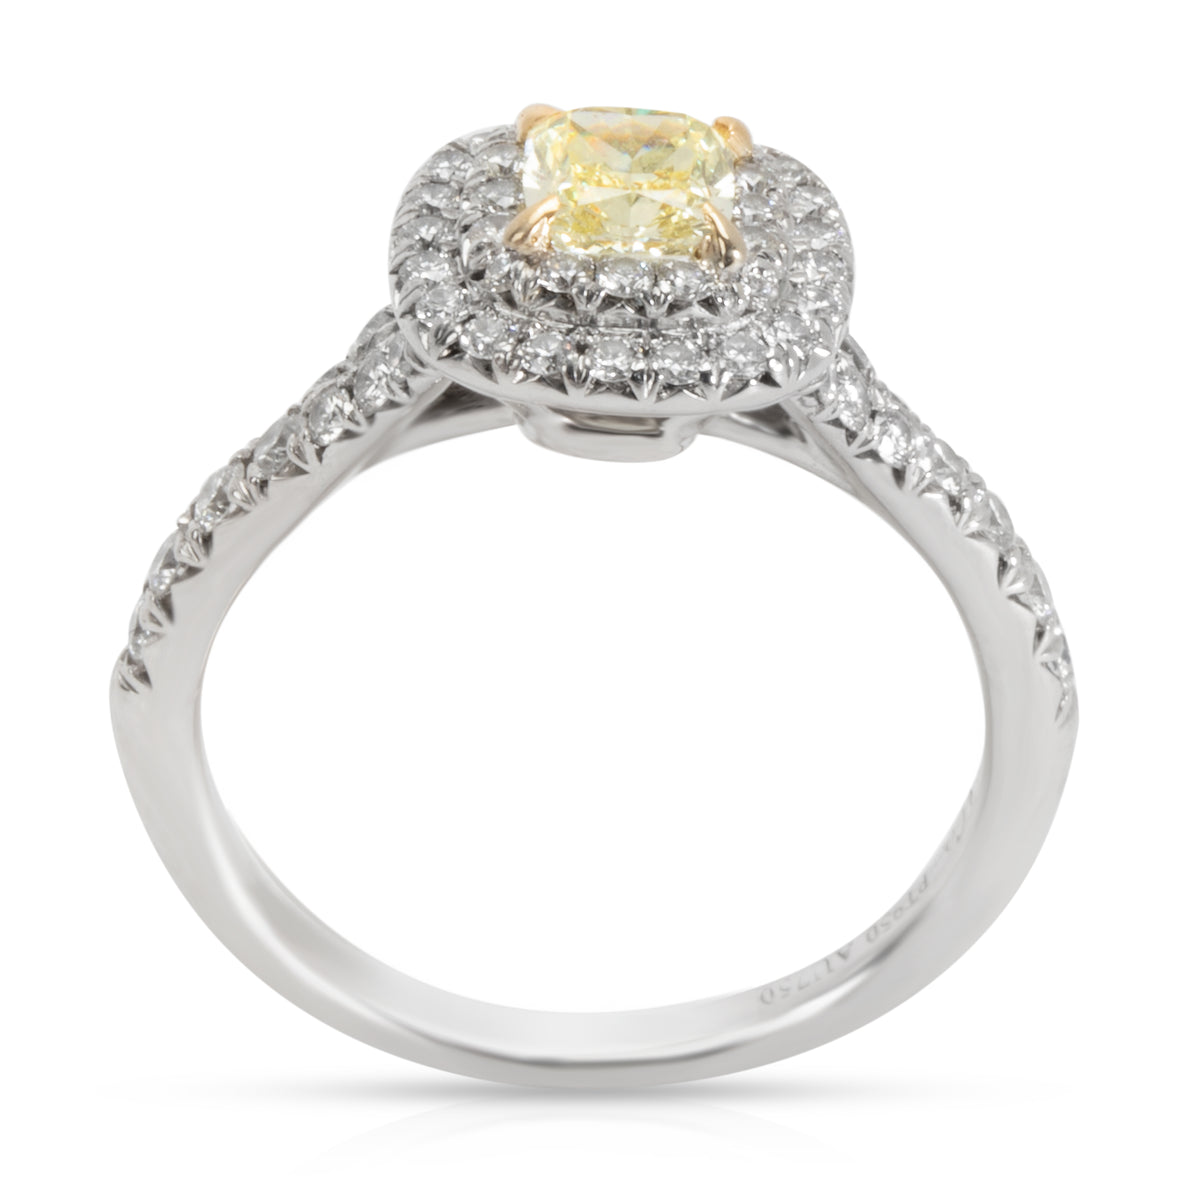 Tiffany & Co. Soleste Diamond Fancy Yellow Engagement Ring in Platinum